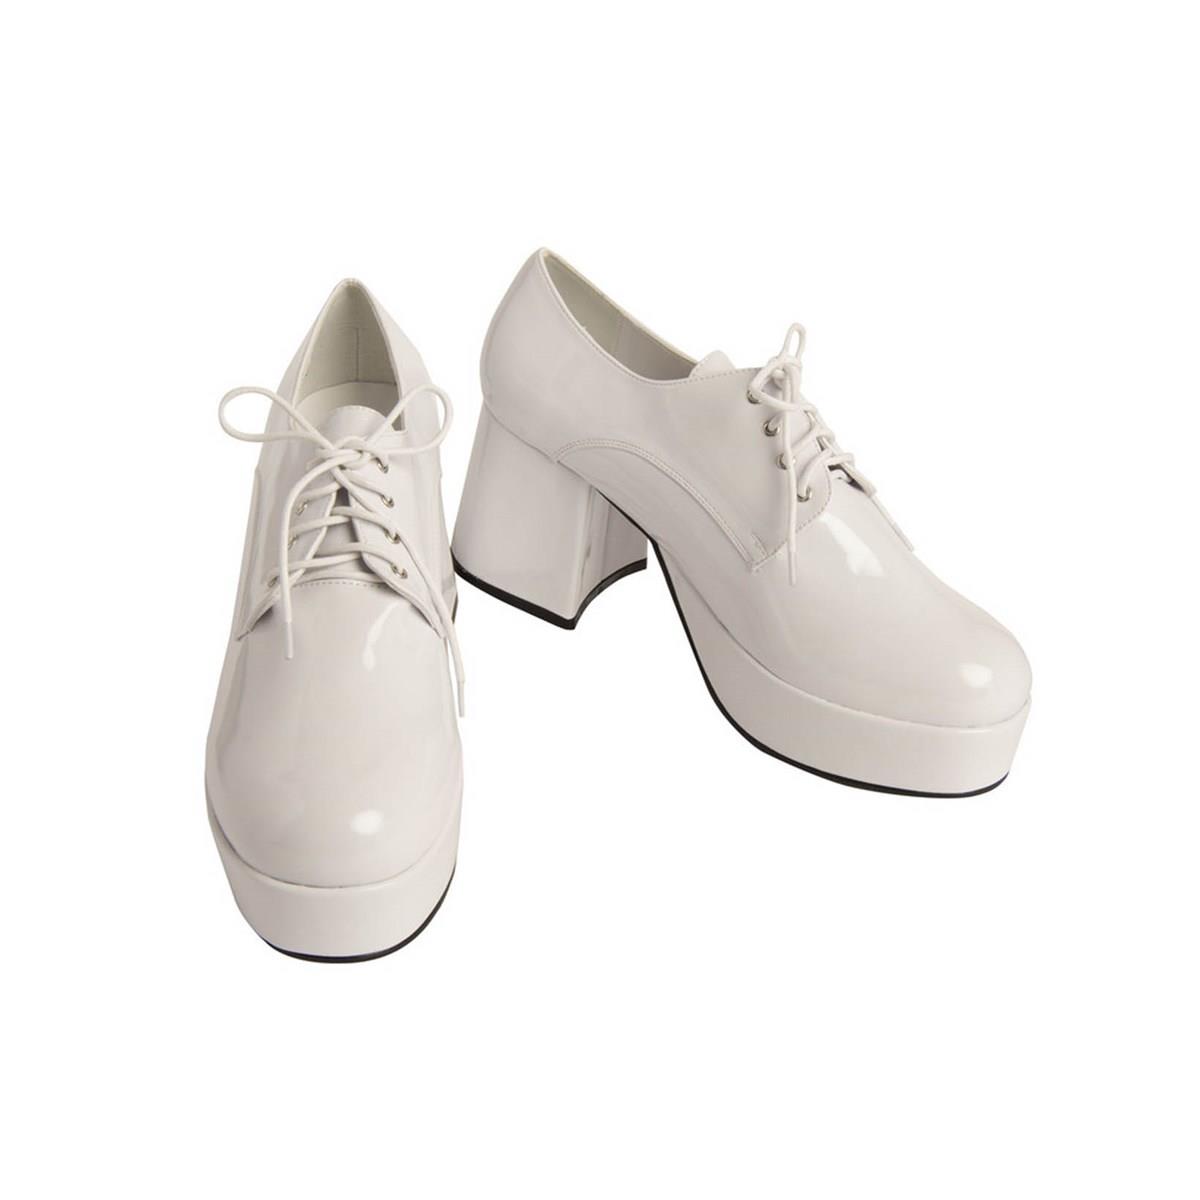 Picture of Rubies 283956 Mens Pimp Platform White Shoes, Size 12-13